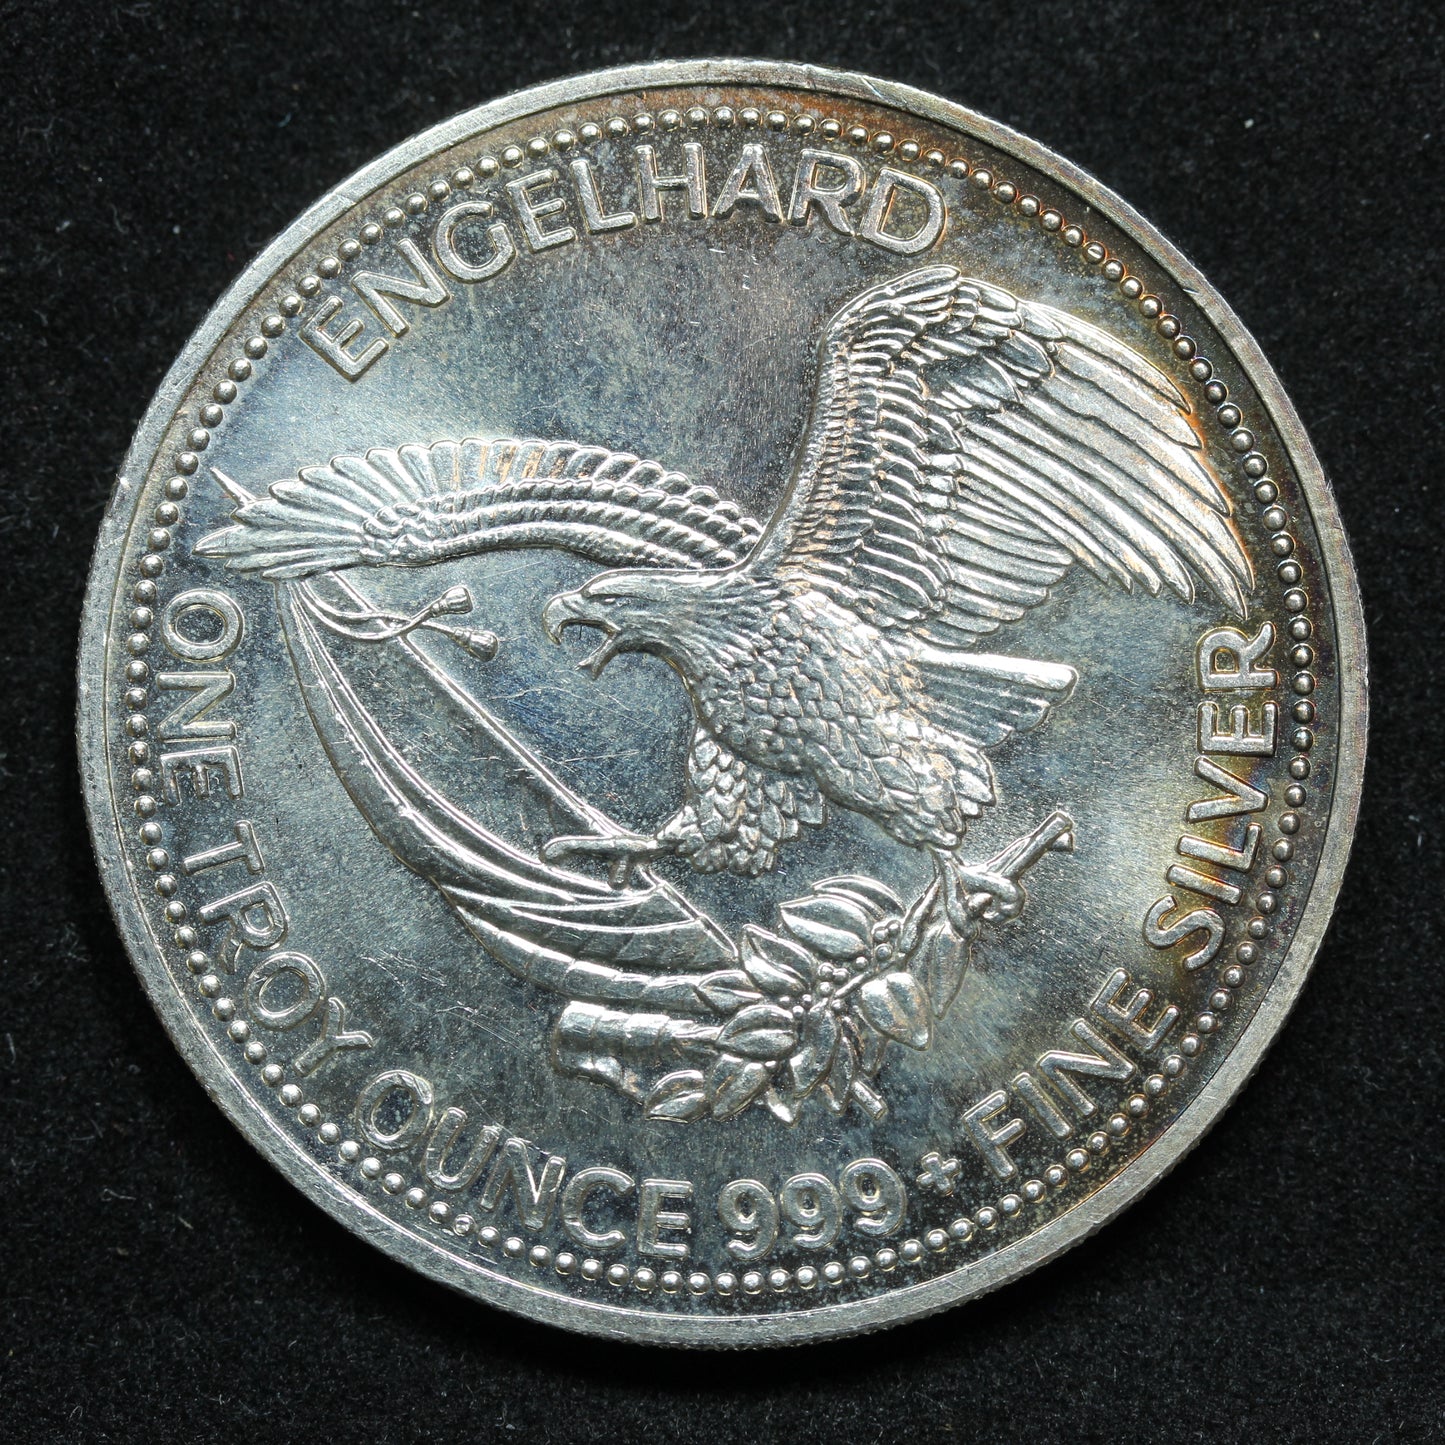 1984 1 oz .999 Fine Silver Engelhard American Prospector - Toning